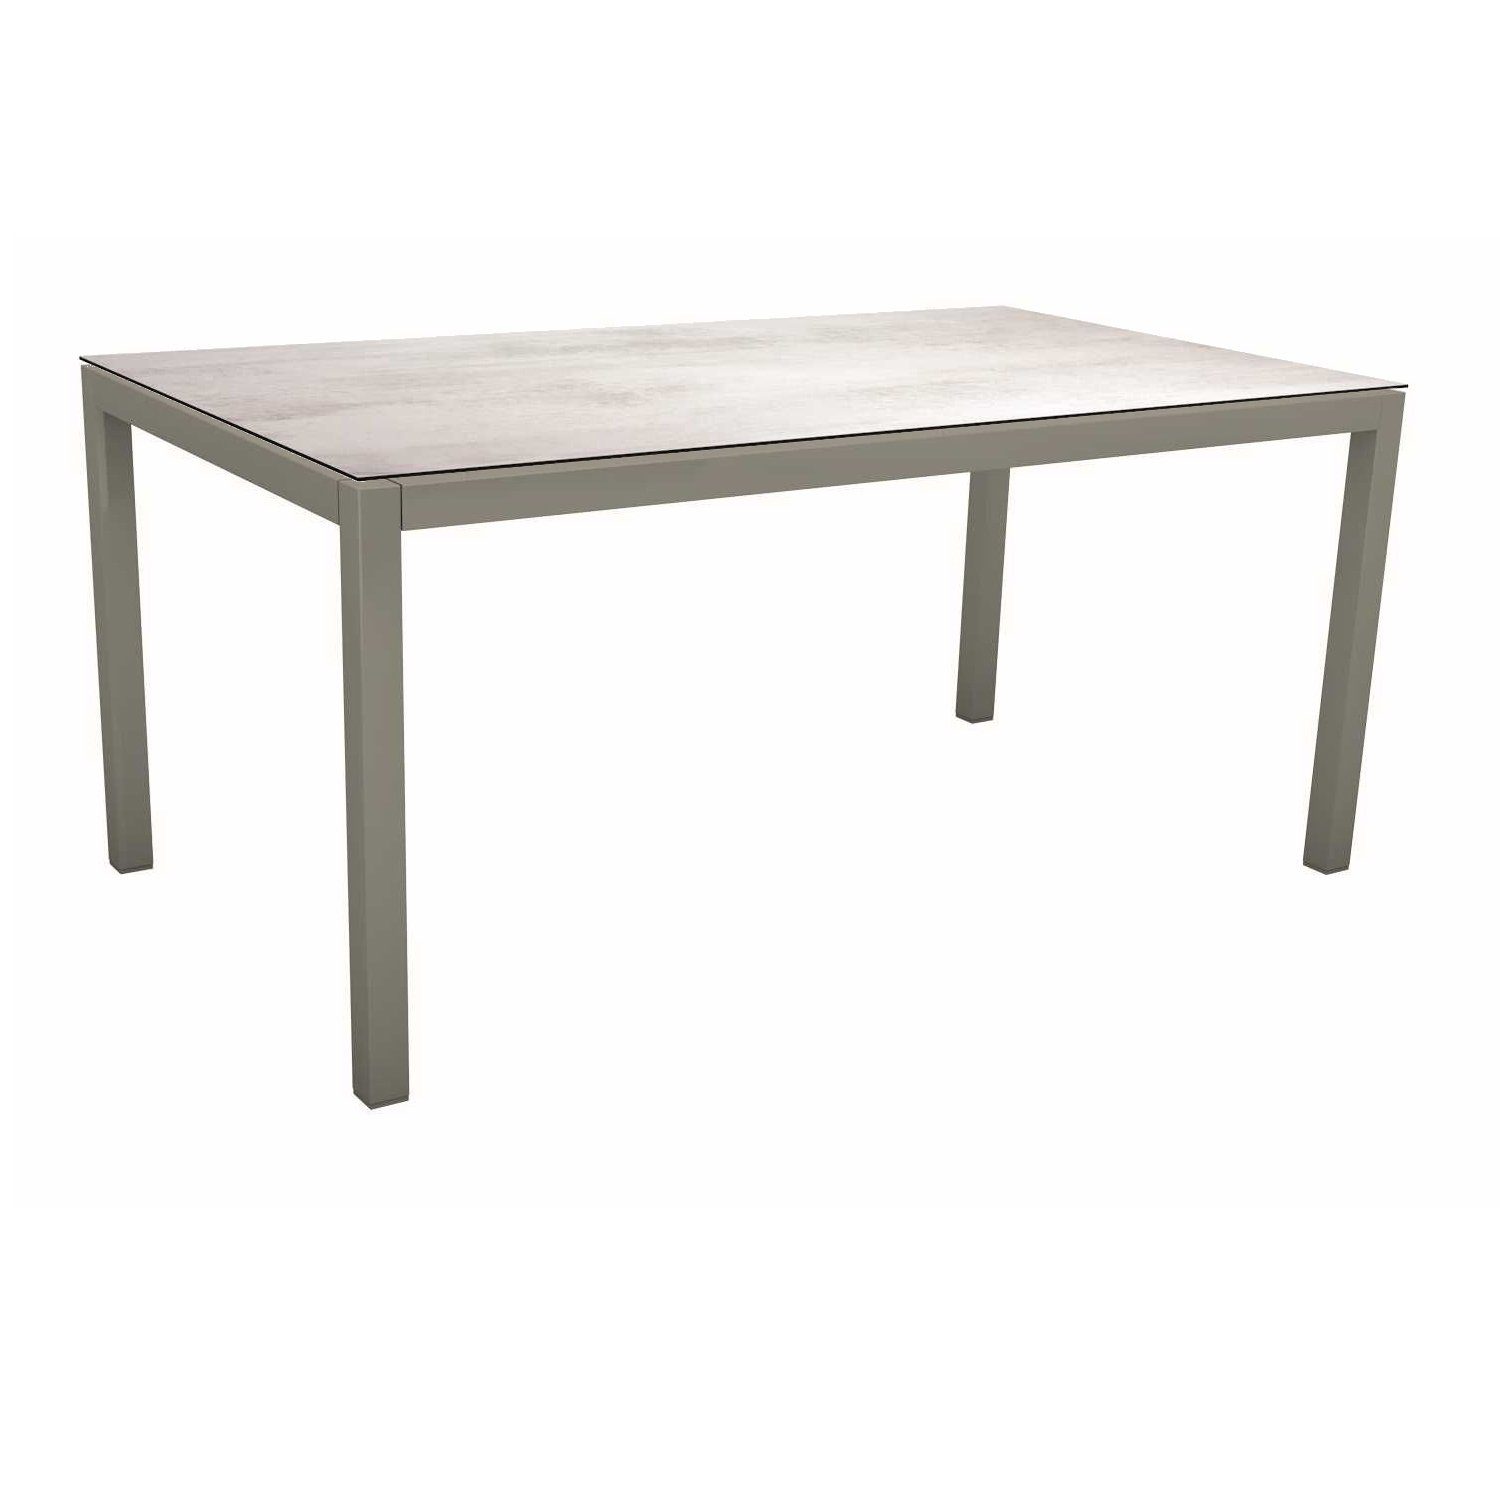 Stern Tischsystem, Gestell Aluminium graphit, Tischplatte HPL Zement hell, 160x90 cm